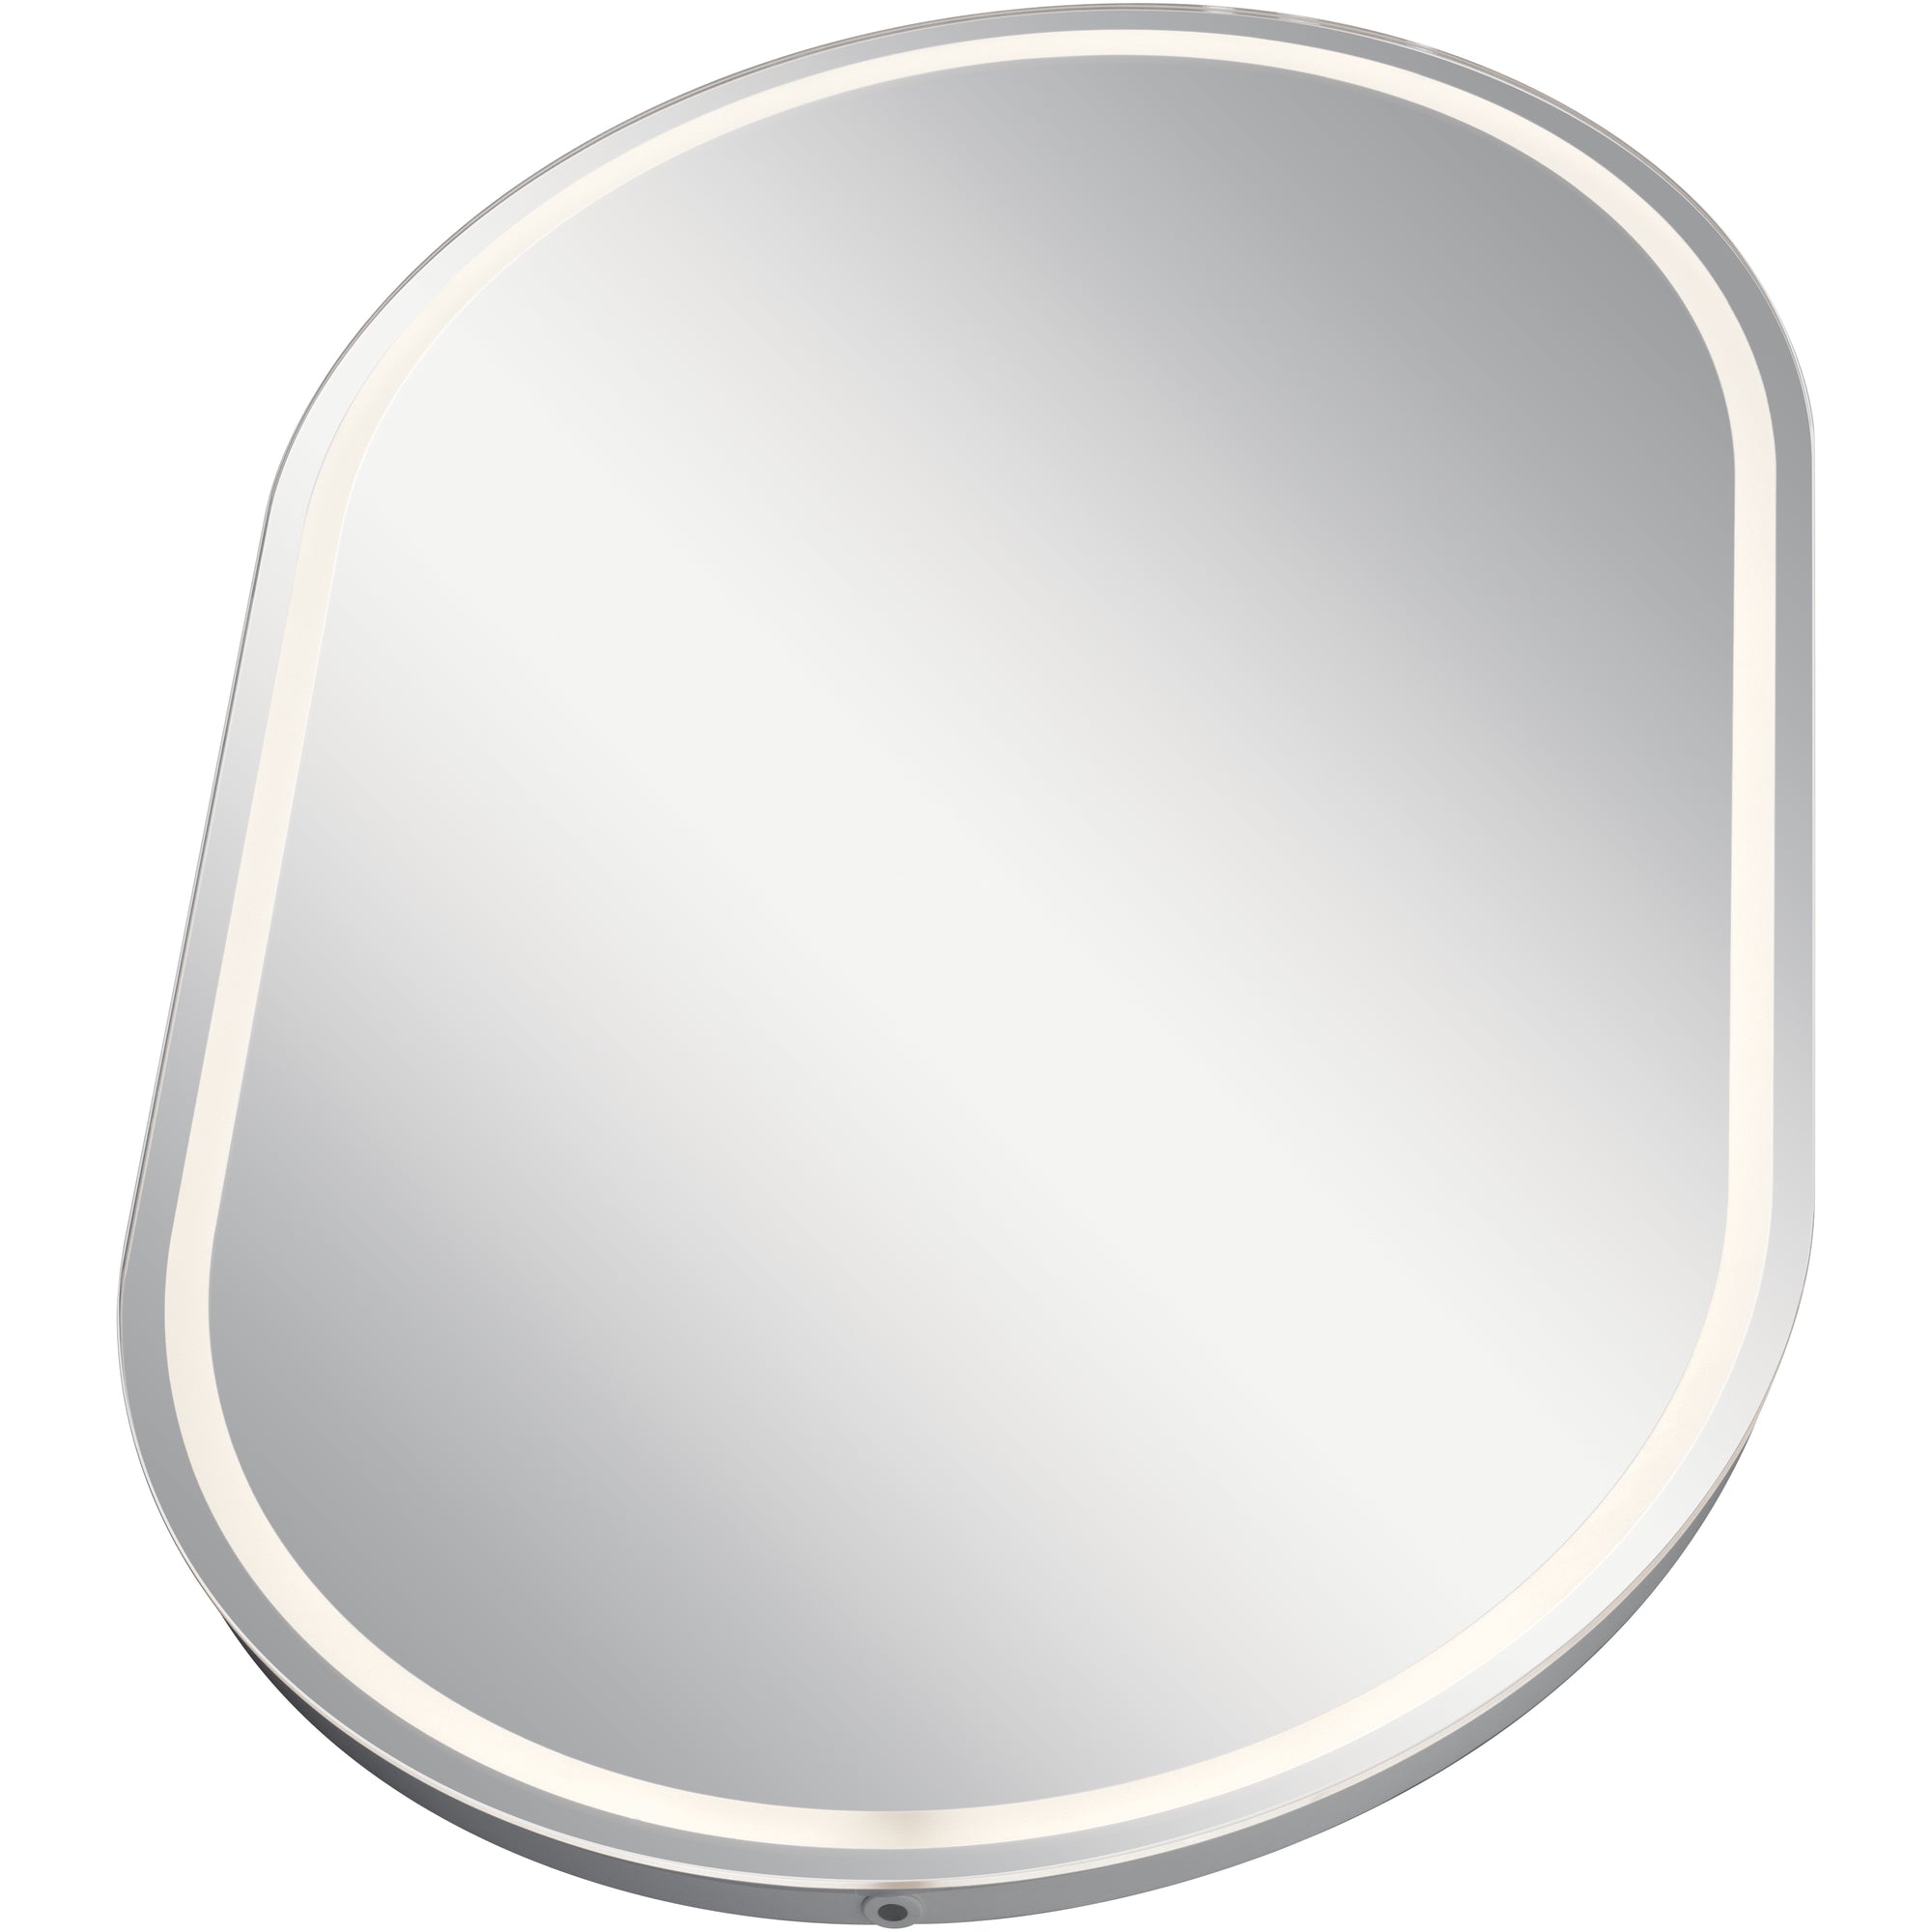 MENILLO Lighting mirror White - 86008 | ELAN